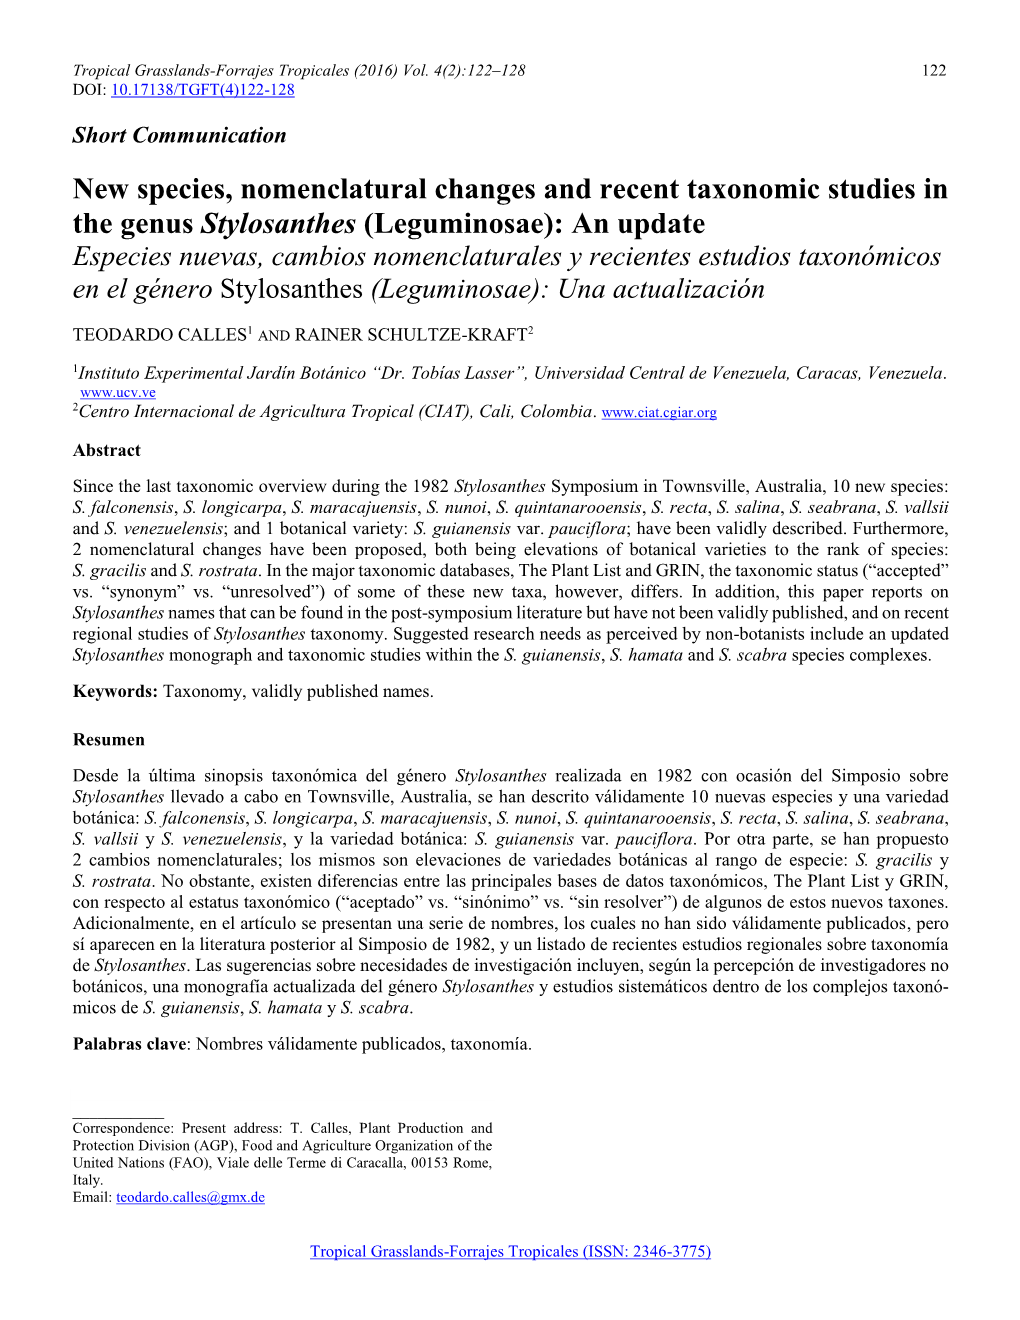 New Species, Nomenclatural Changes and Recent Taxonomic Studies in The